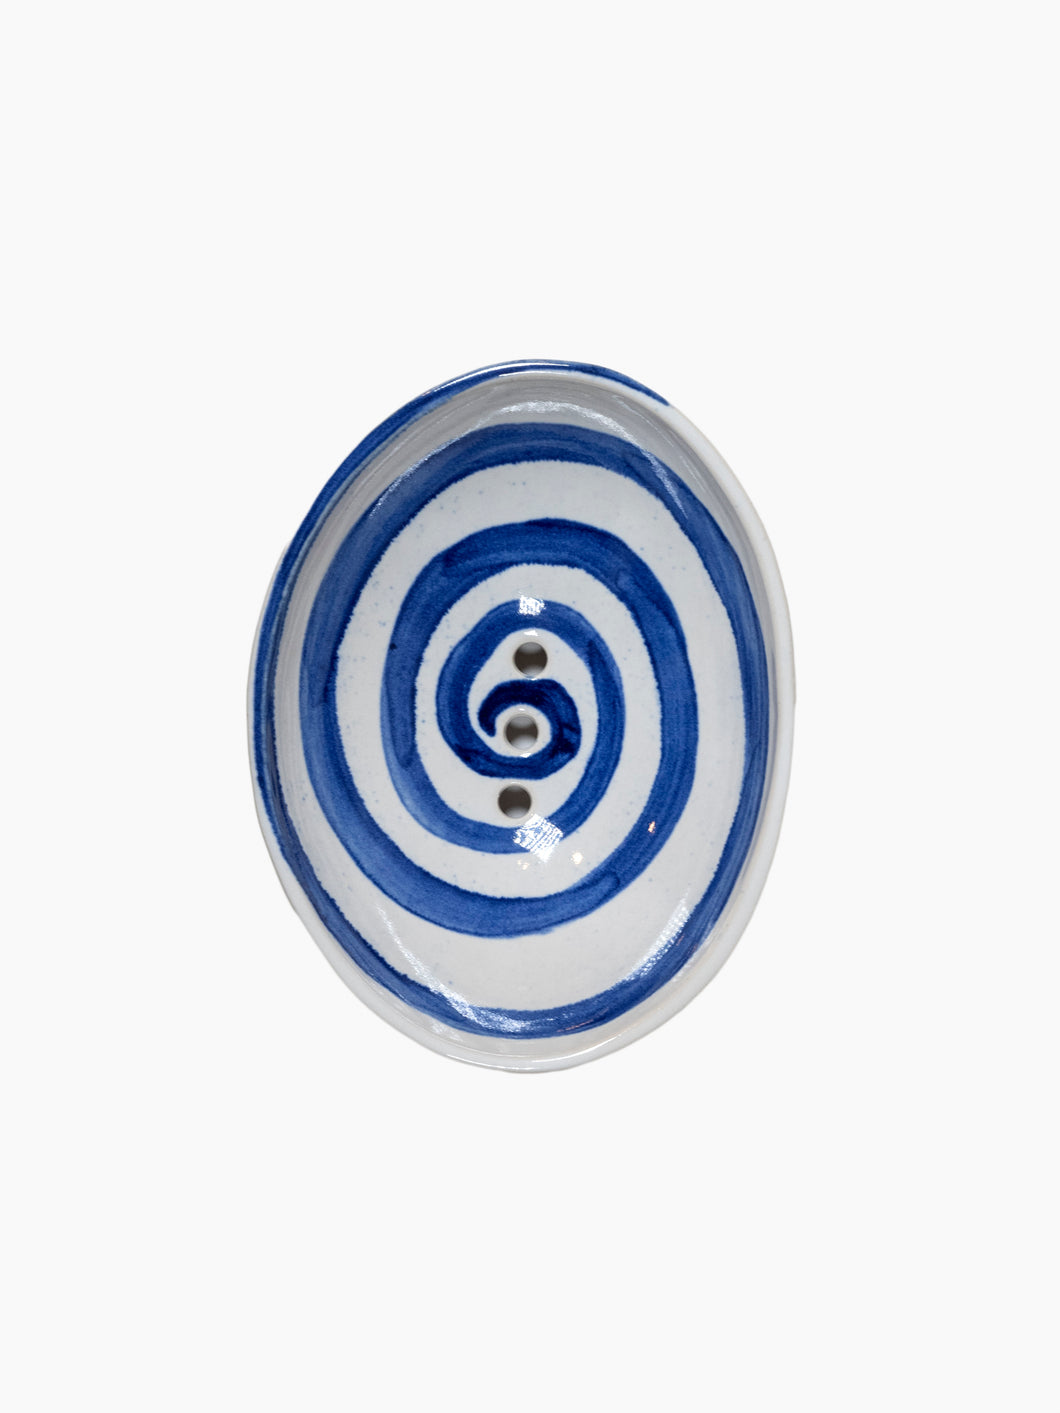 Blue Spiral Soap Dish